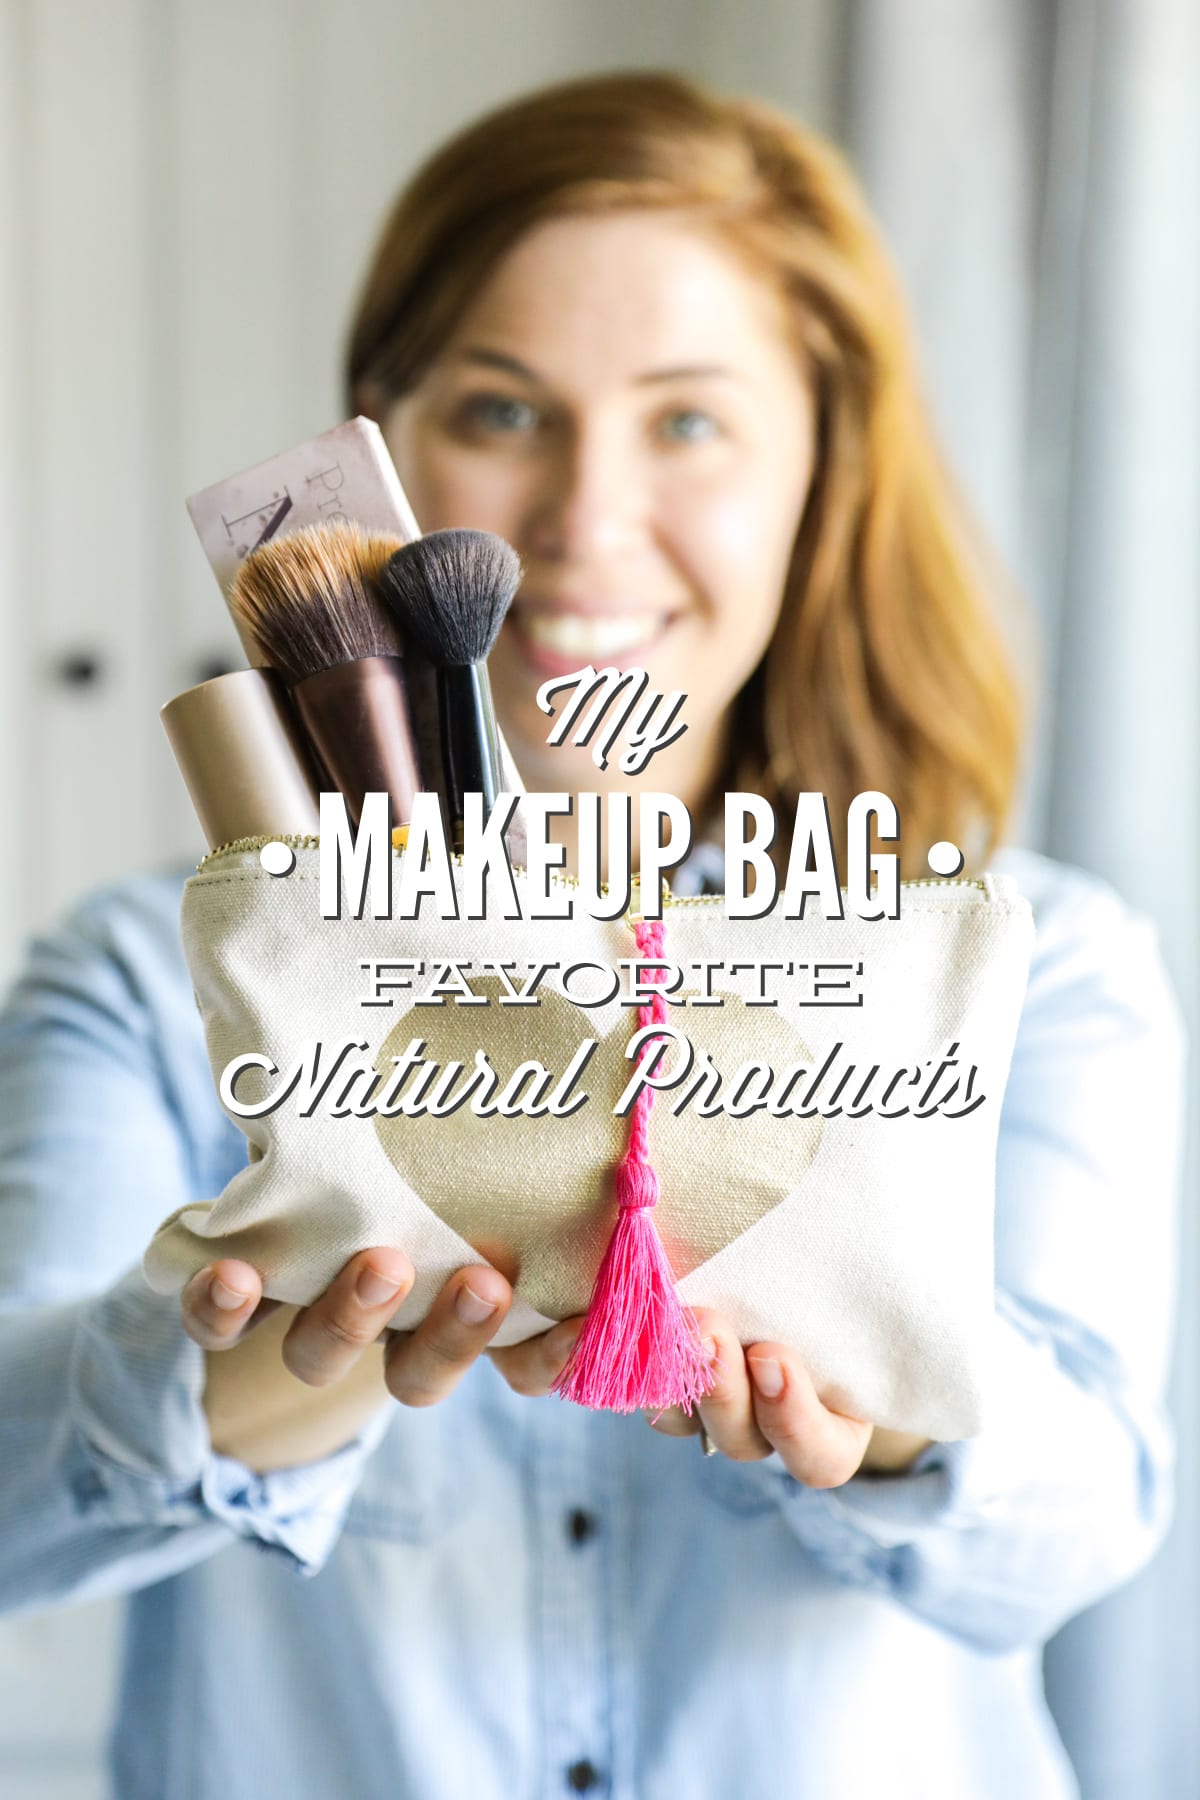 My Makeup Bag: Favorite Natural Products